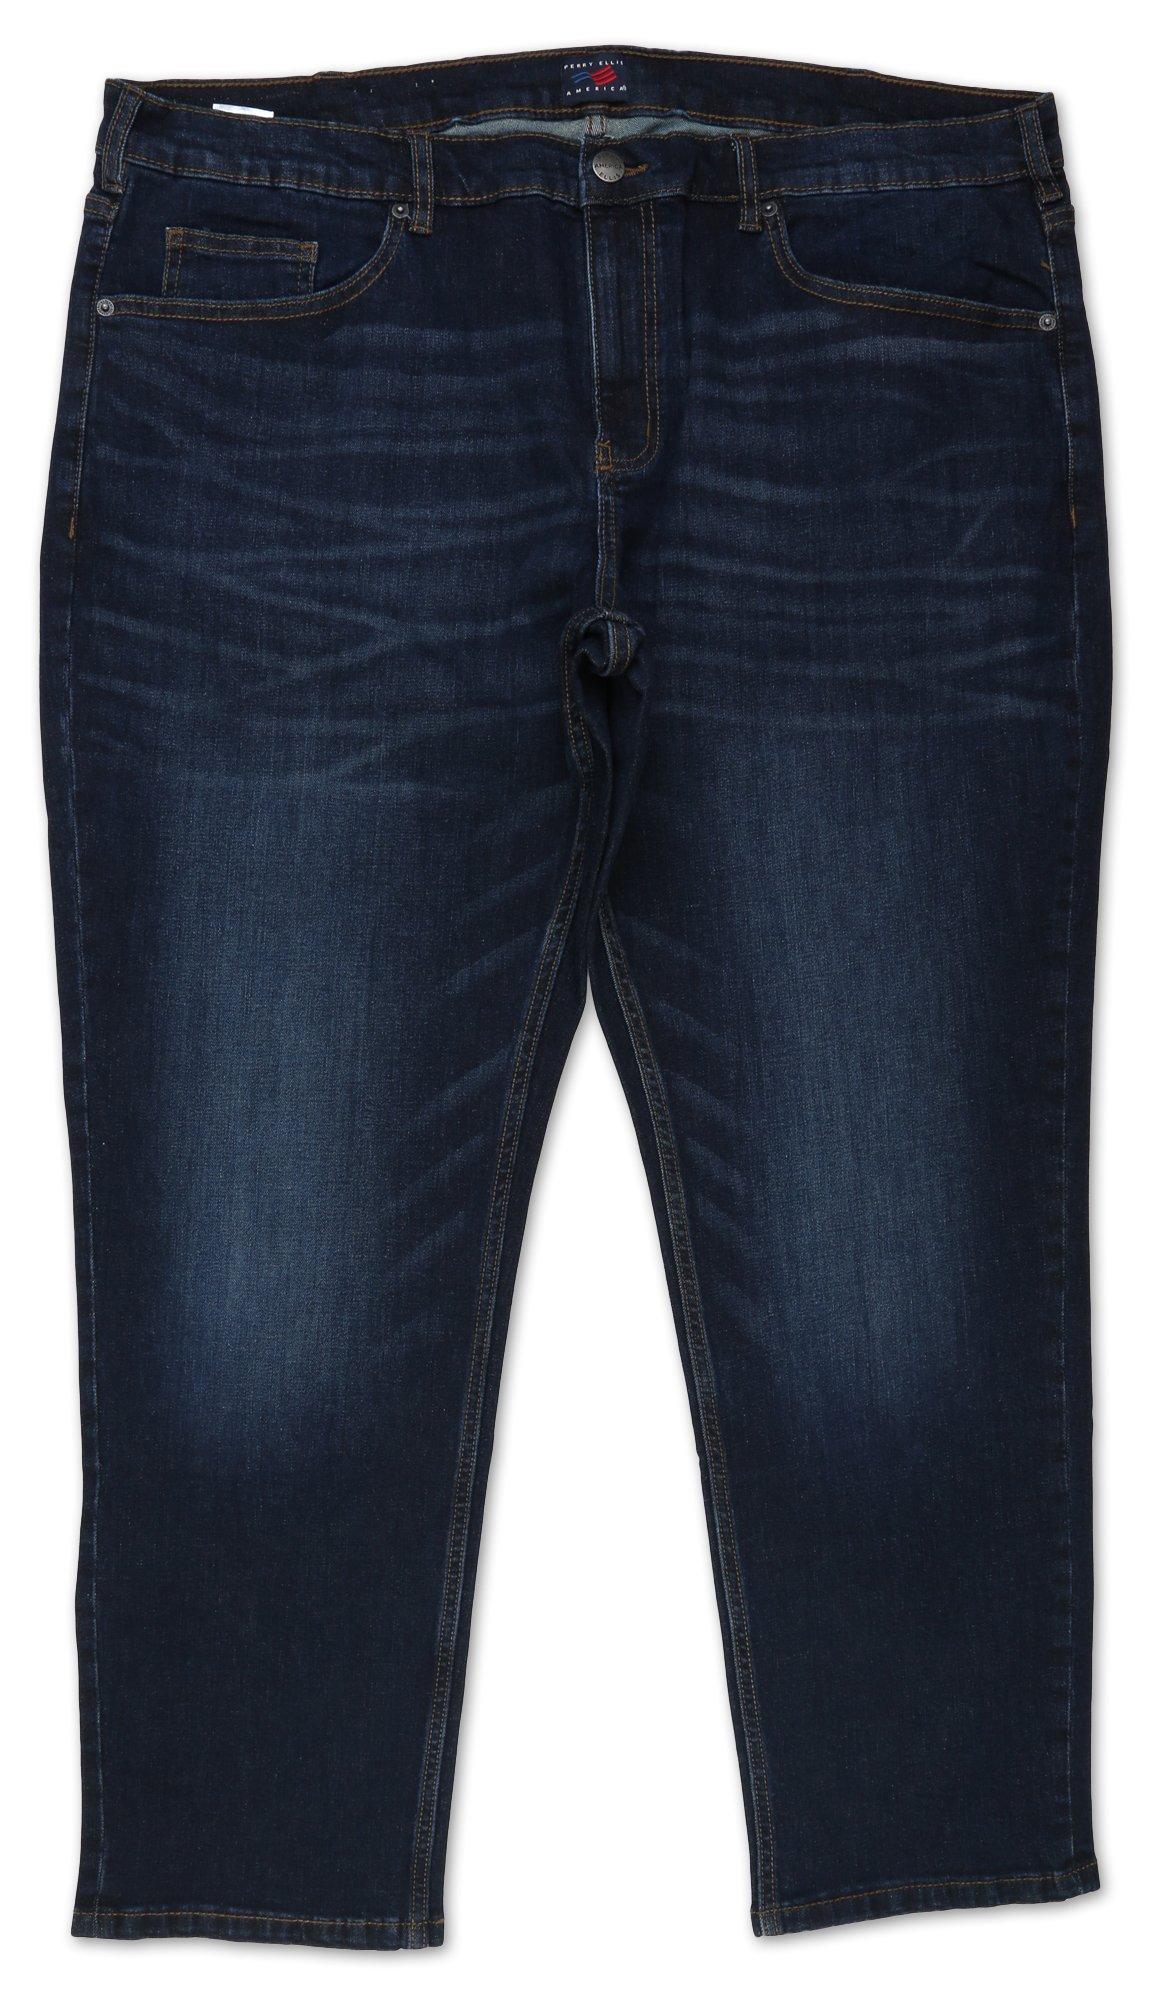 Men's Classic Denim Jeans - Dark Wash